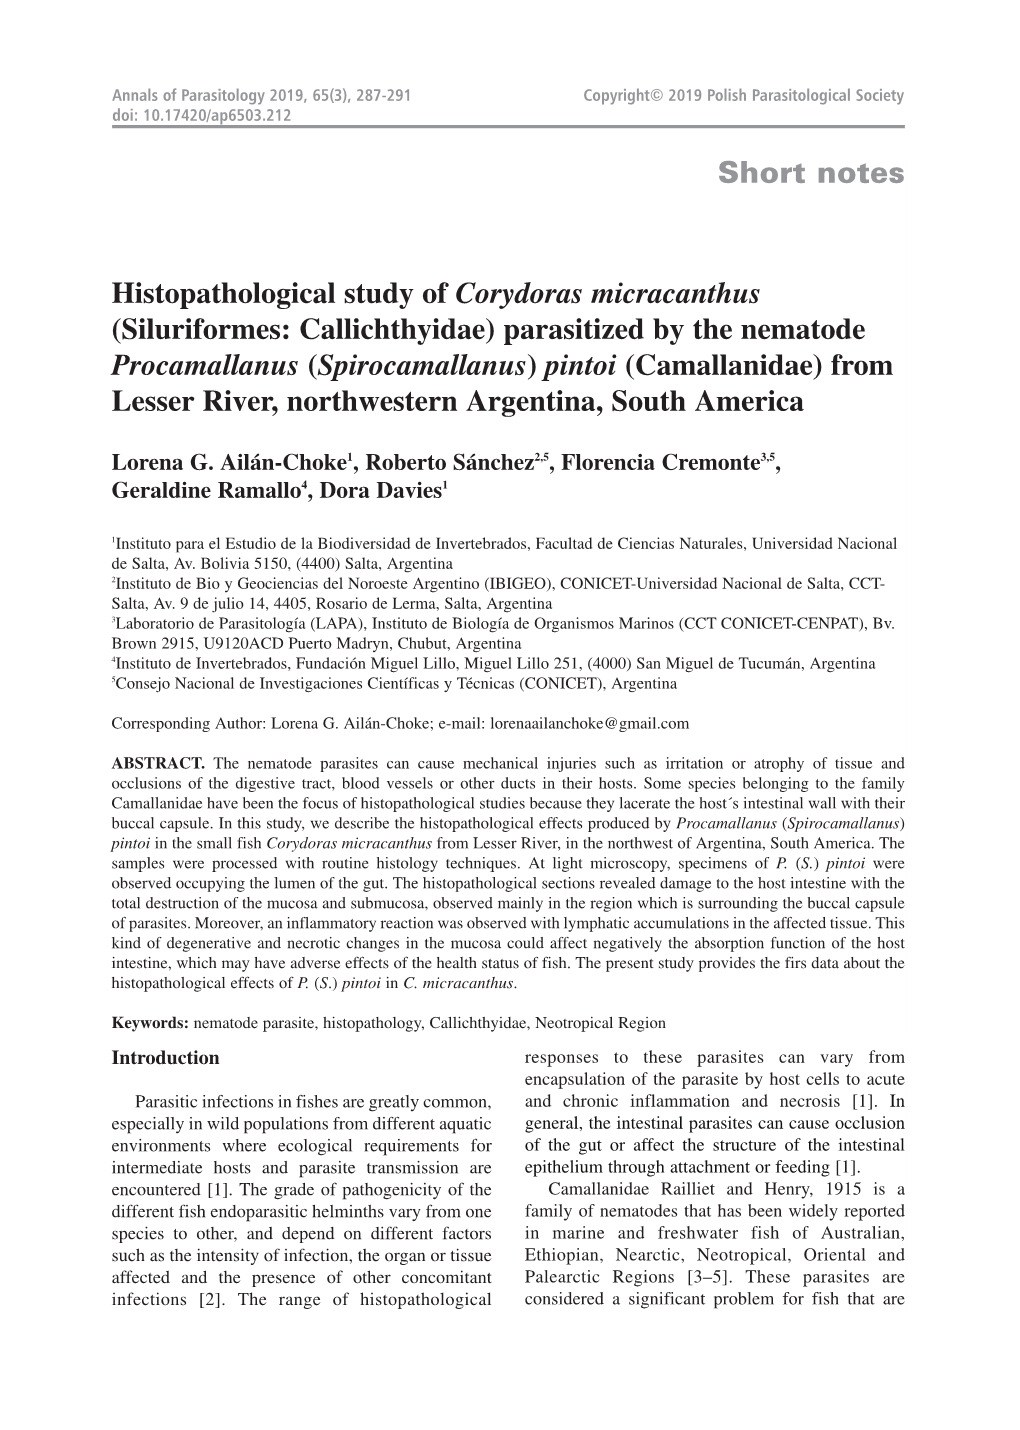 Short Notes Histopathological Study of Corydoras Micracanthus